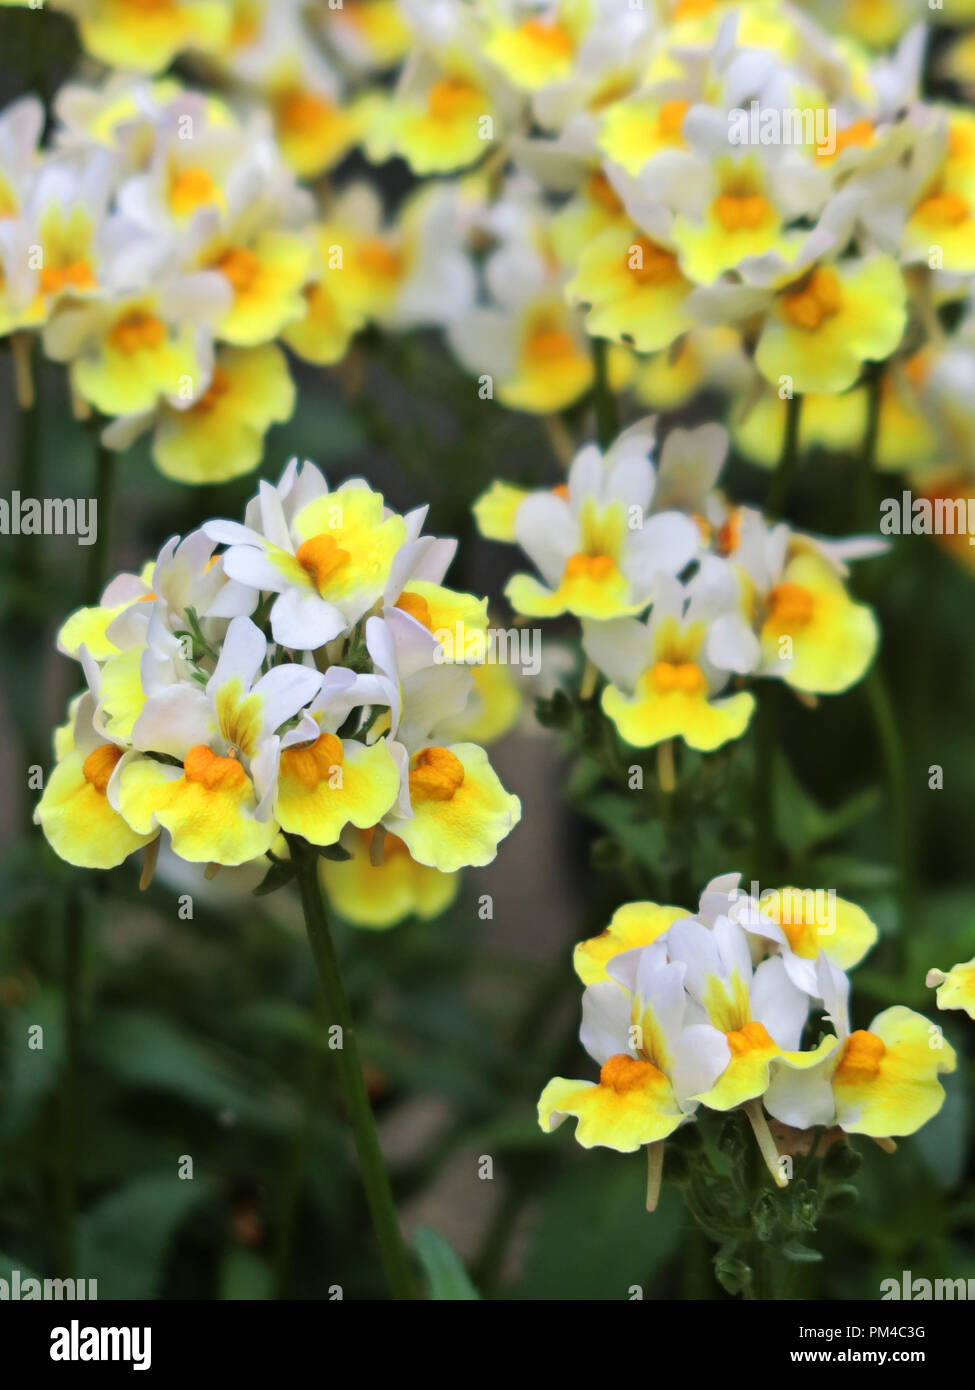 Nemesia Sunpeddle Yellow and White Hybrid Bedding Plant Stock Photo